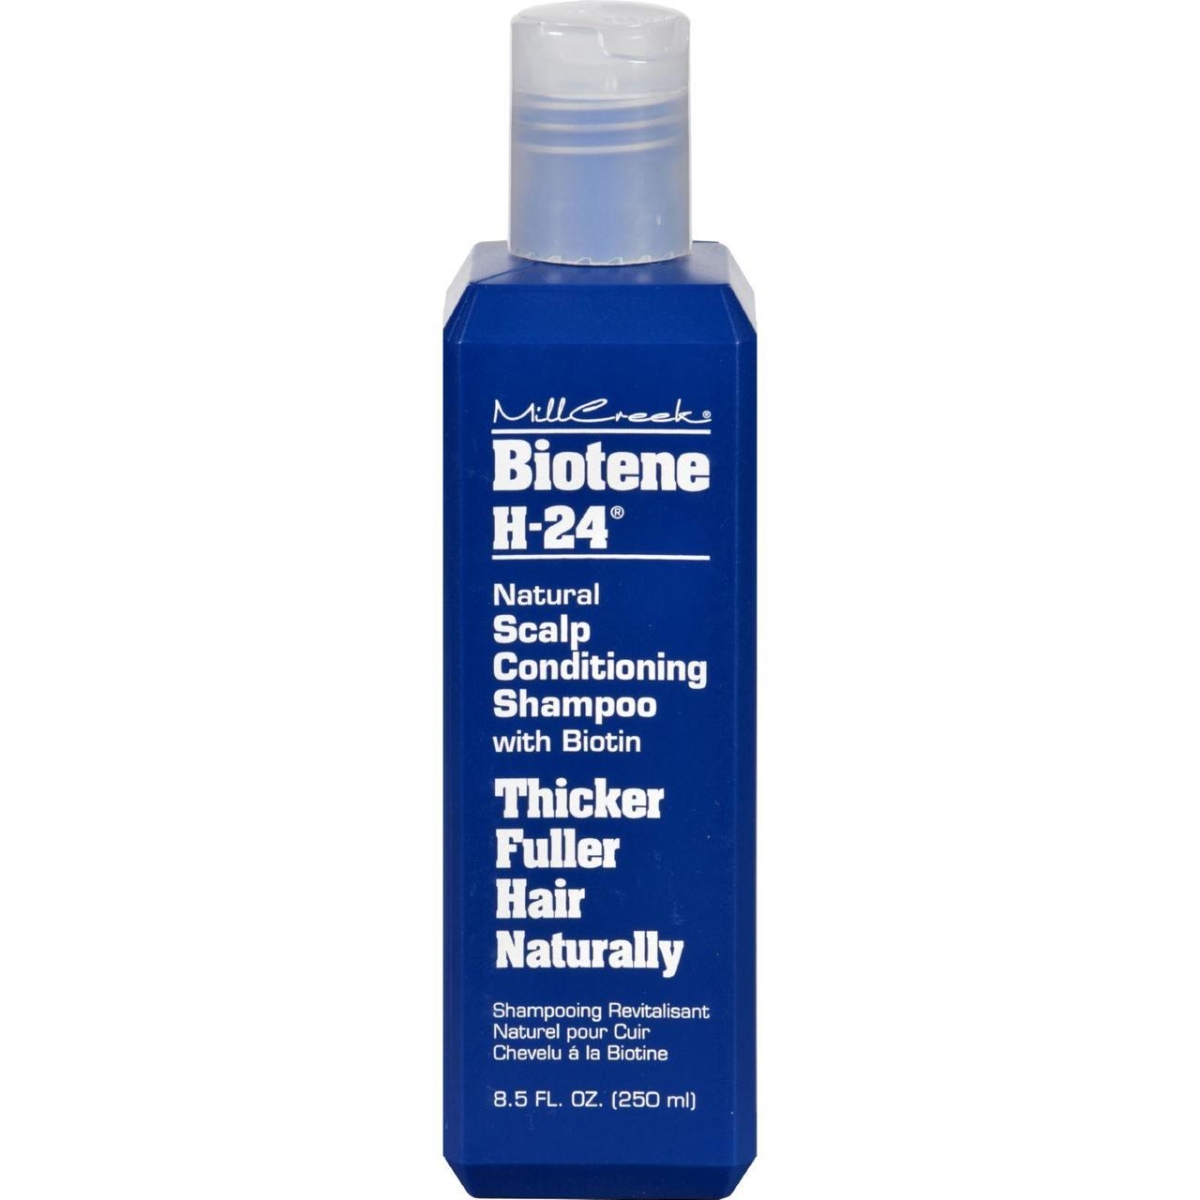 Hg0728824 8.5 Oz Shampoo Biotene H-24 Scalp Conditioning